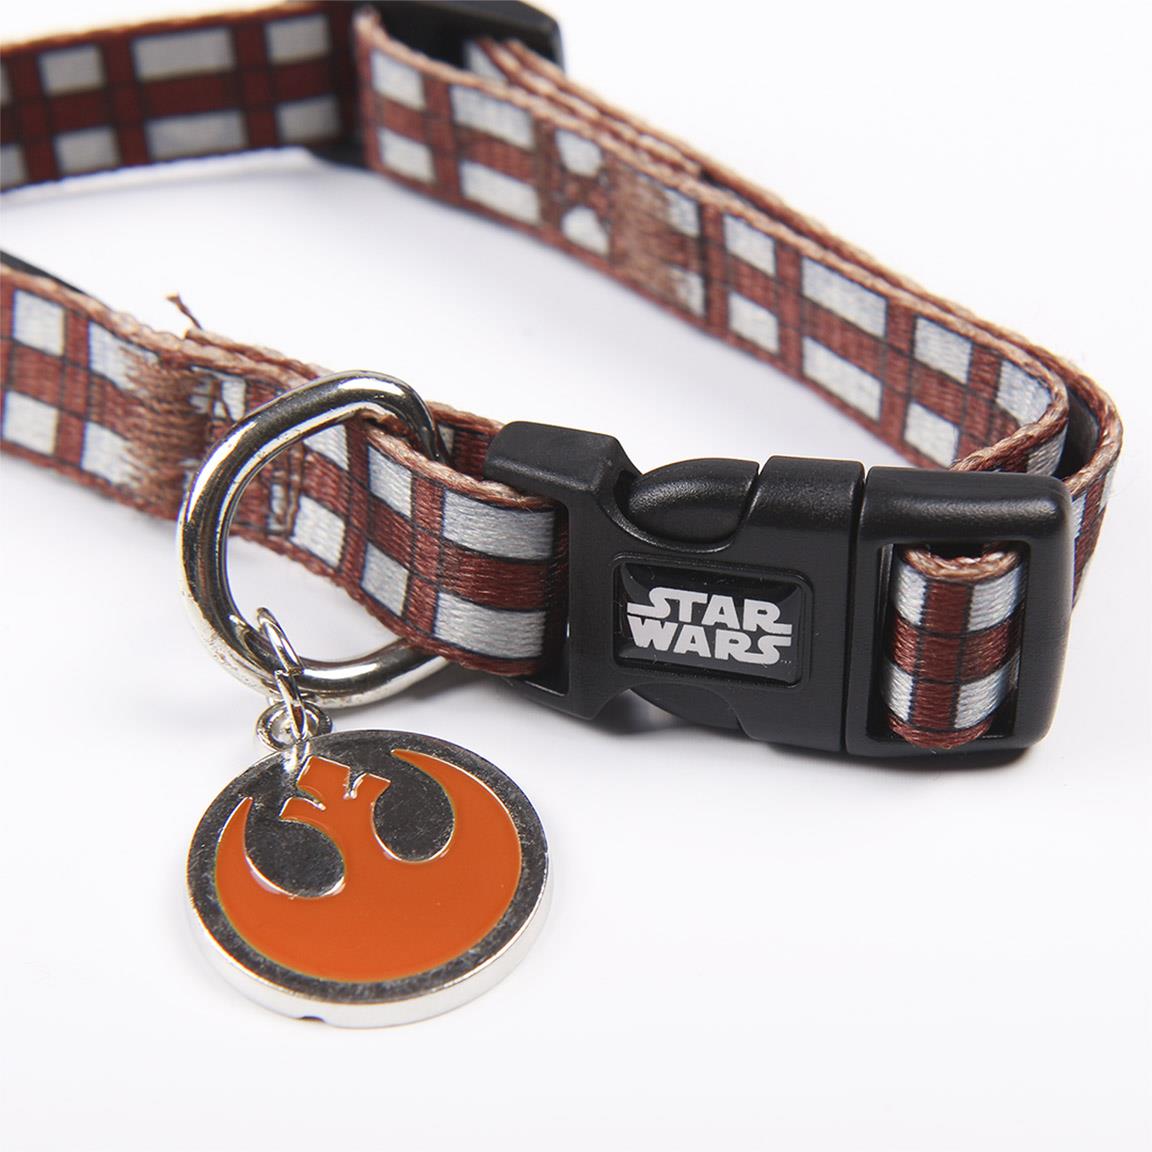 Collare per cani Star Wars Chewbacca Taglia XXS-XS